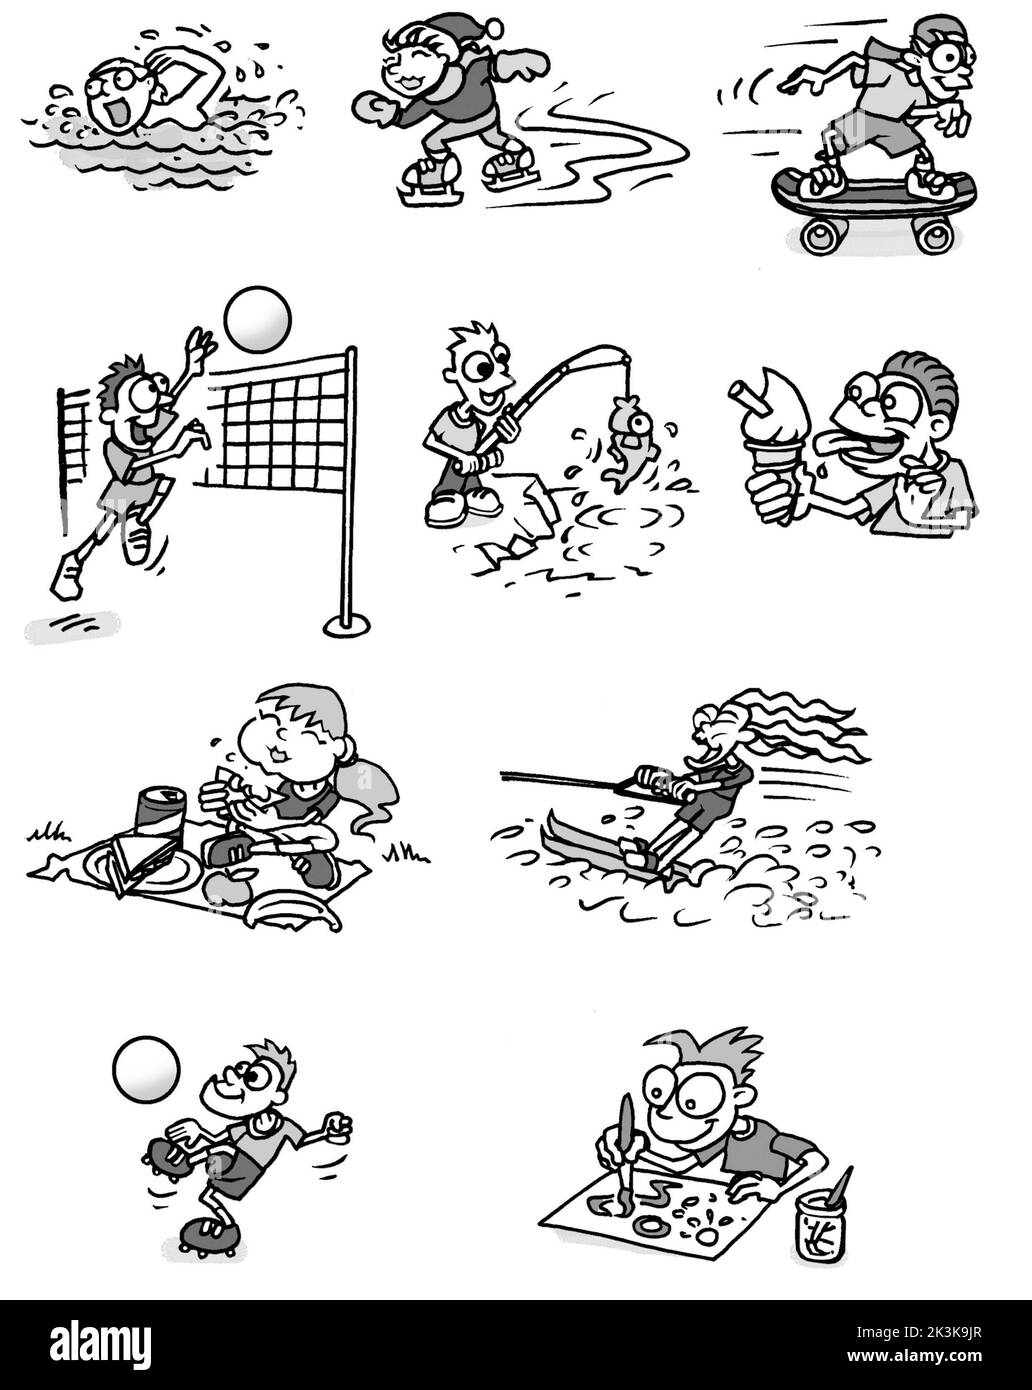 Black & white art: children enjoying sports & activities, inc fishing football volleyball, swimming, iceskating, skateboarding colouring in worksheet Stock Photo